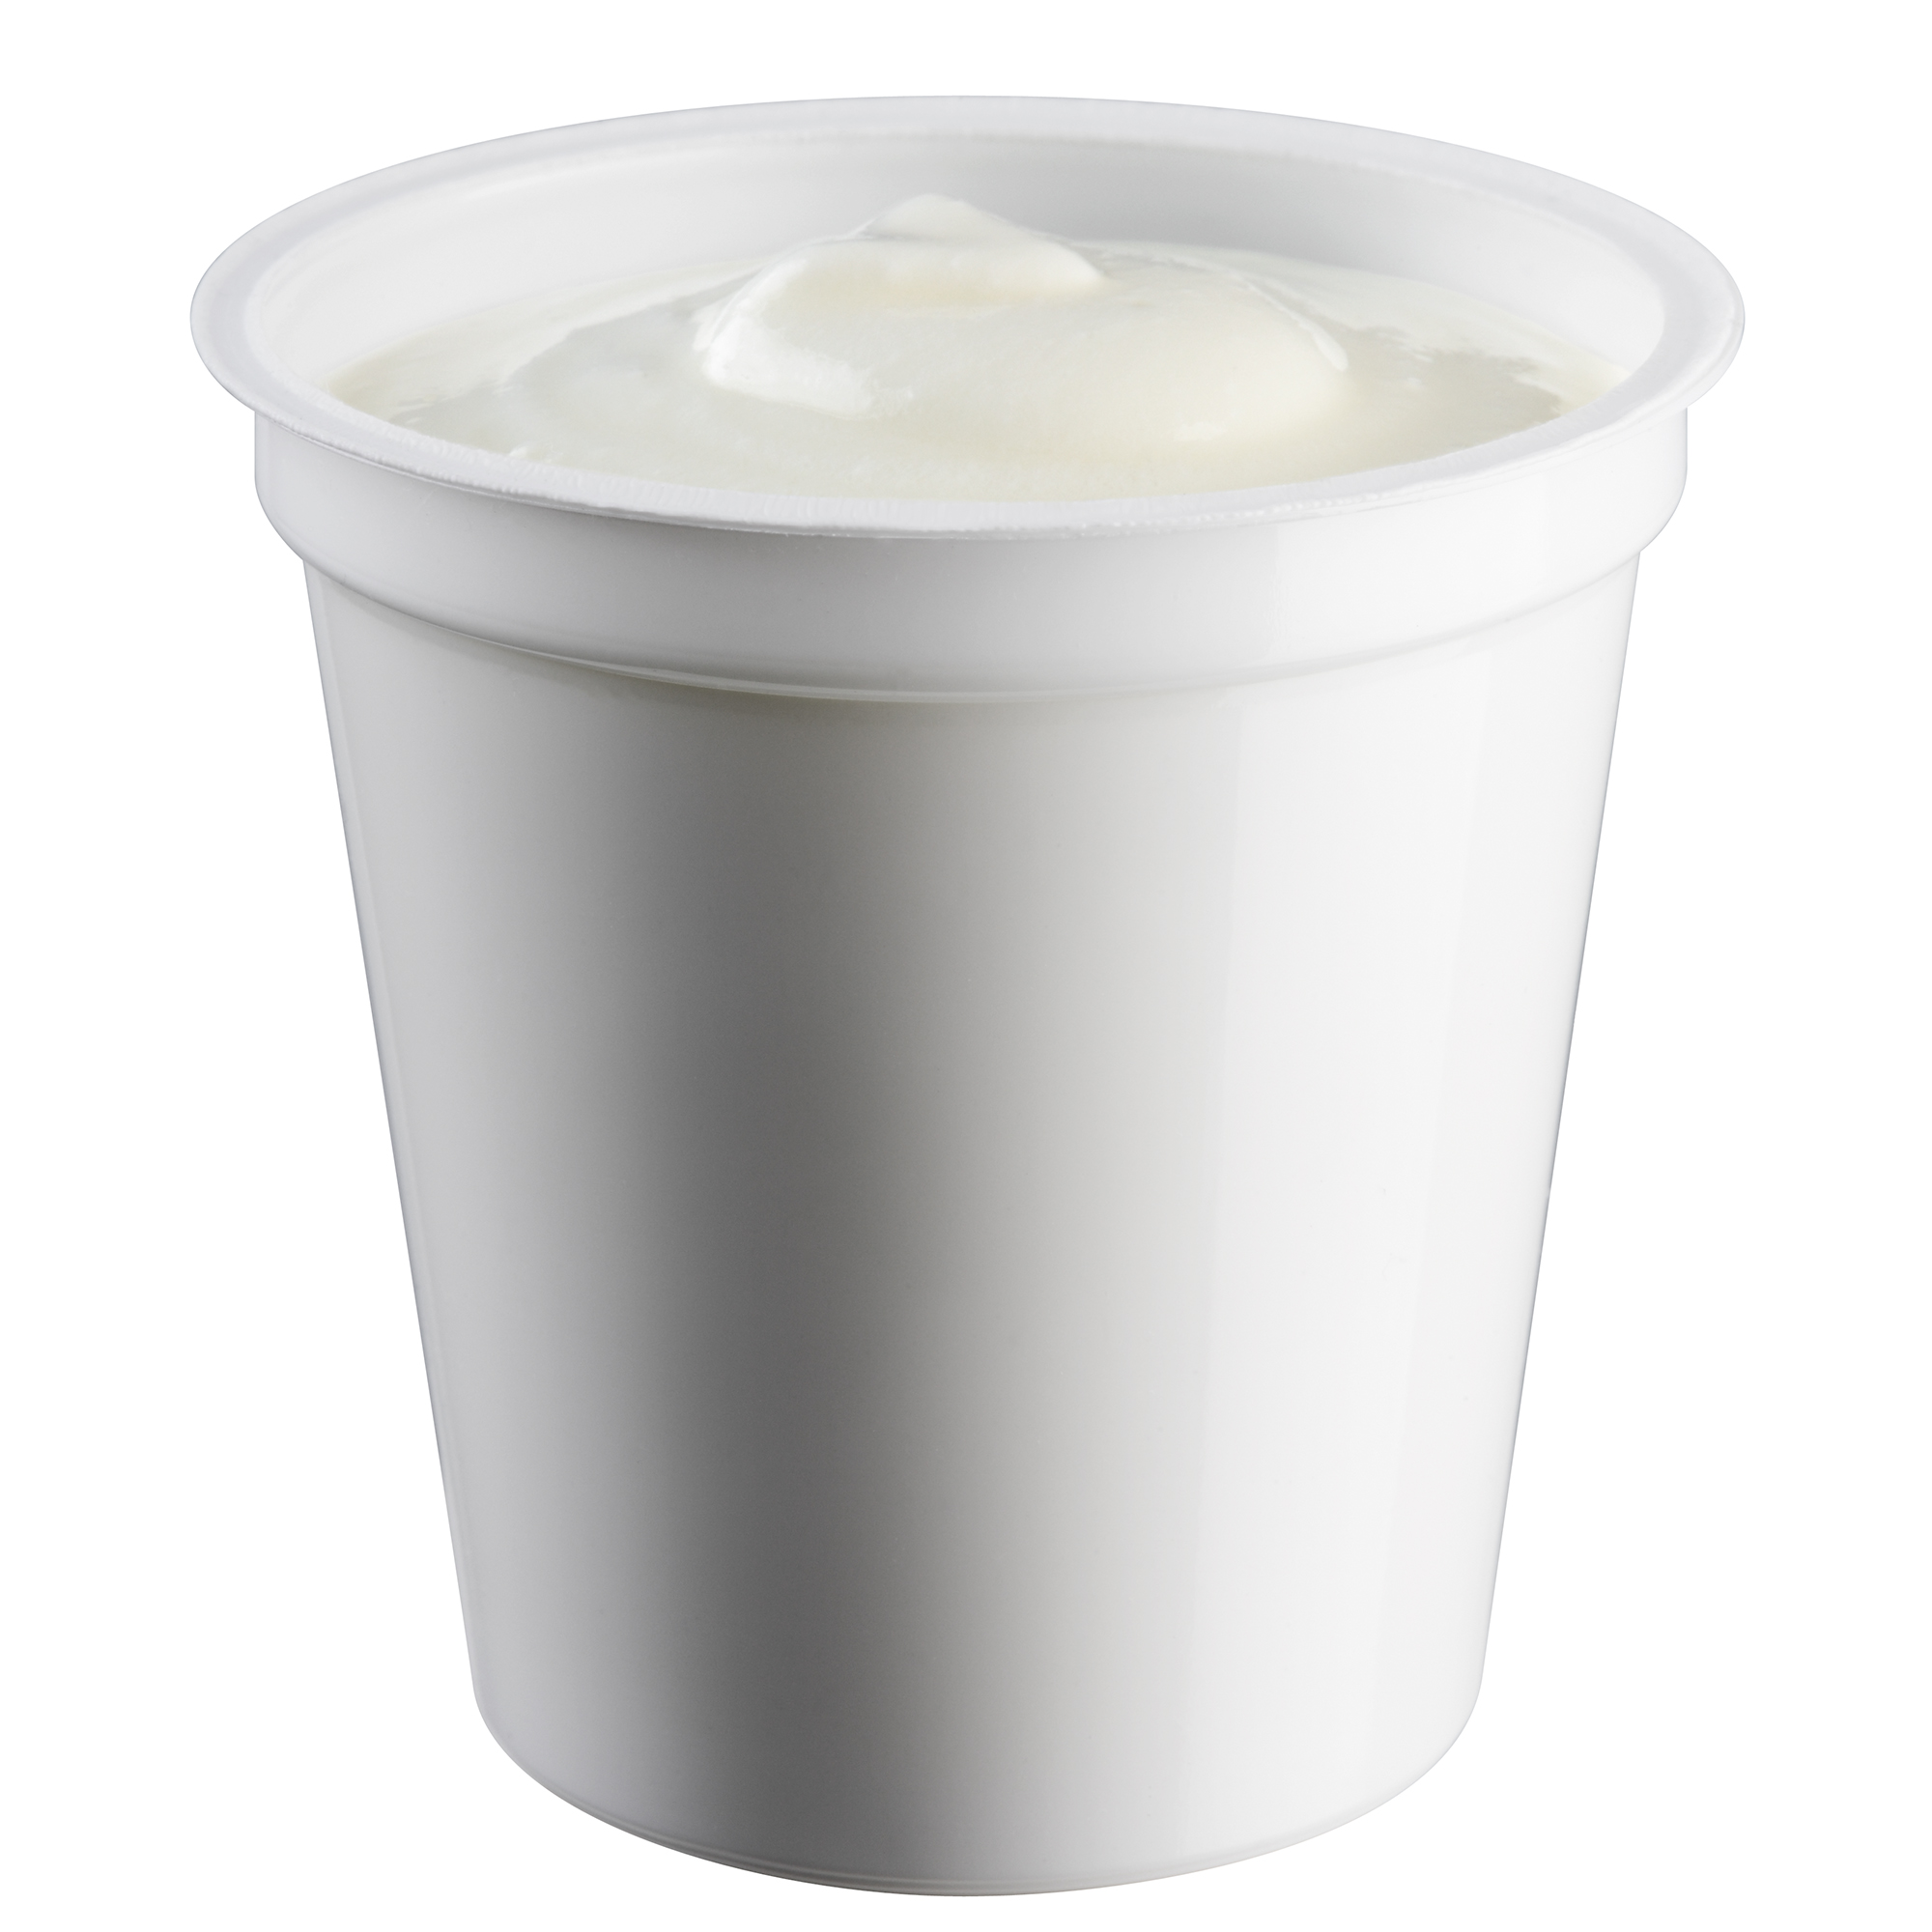 GimCat Yoghurt 150g